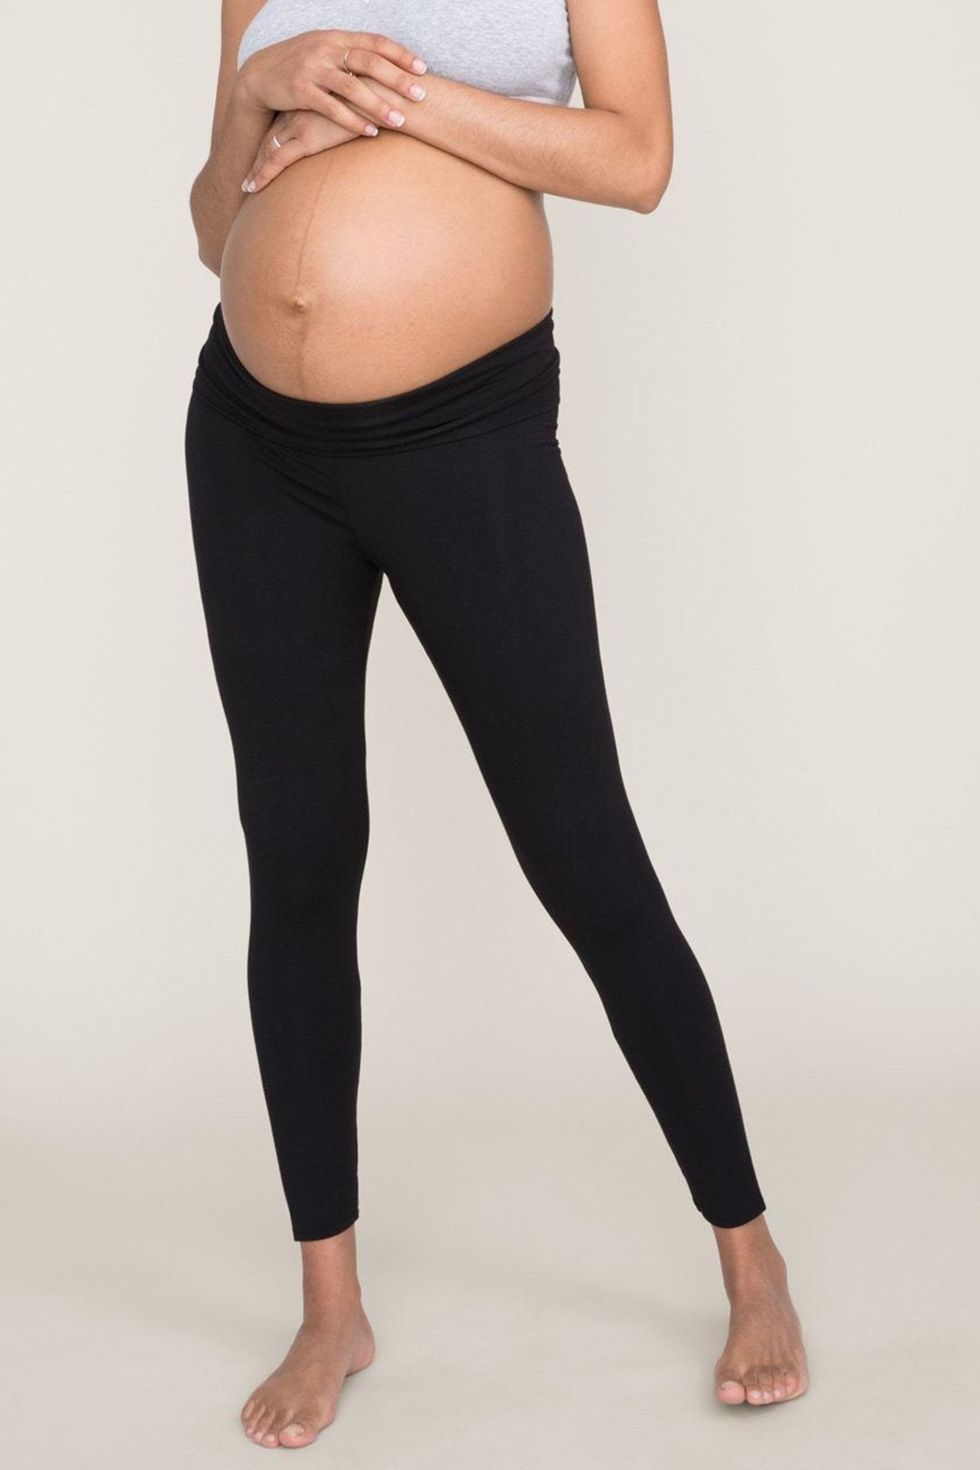 Women's Ultra-Soft Stretchy Maternity Legging Shorts Black